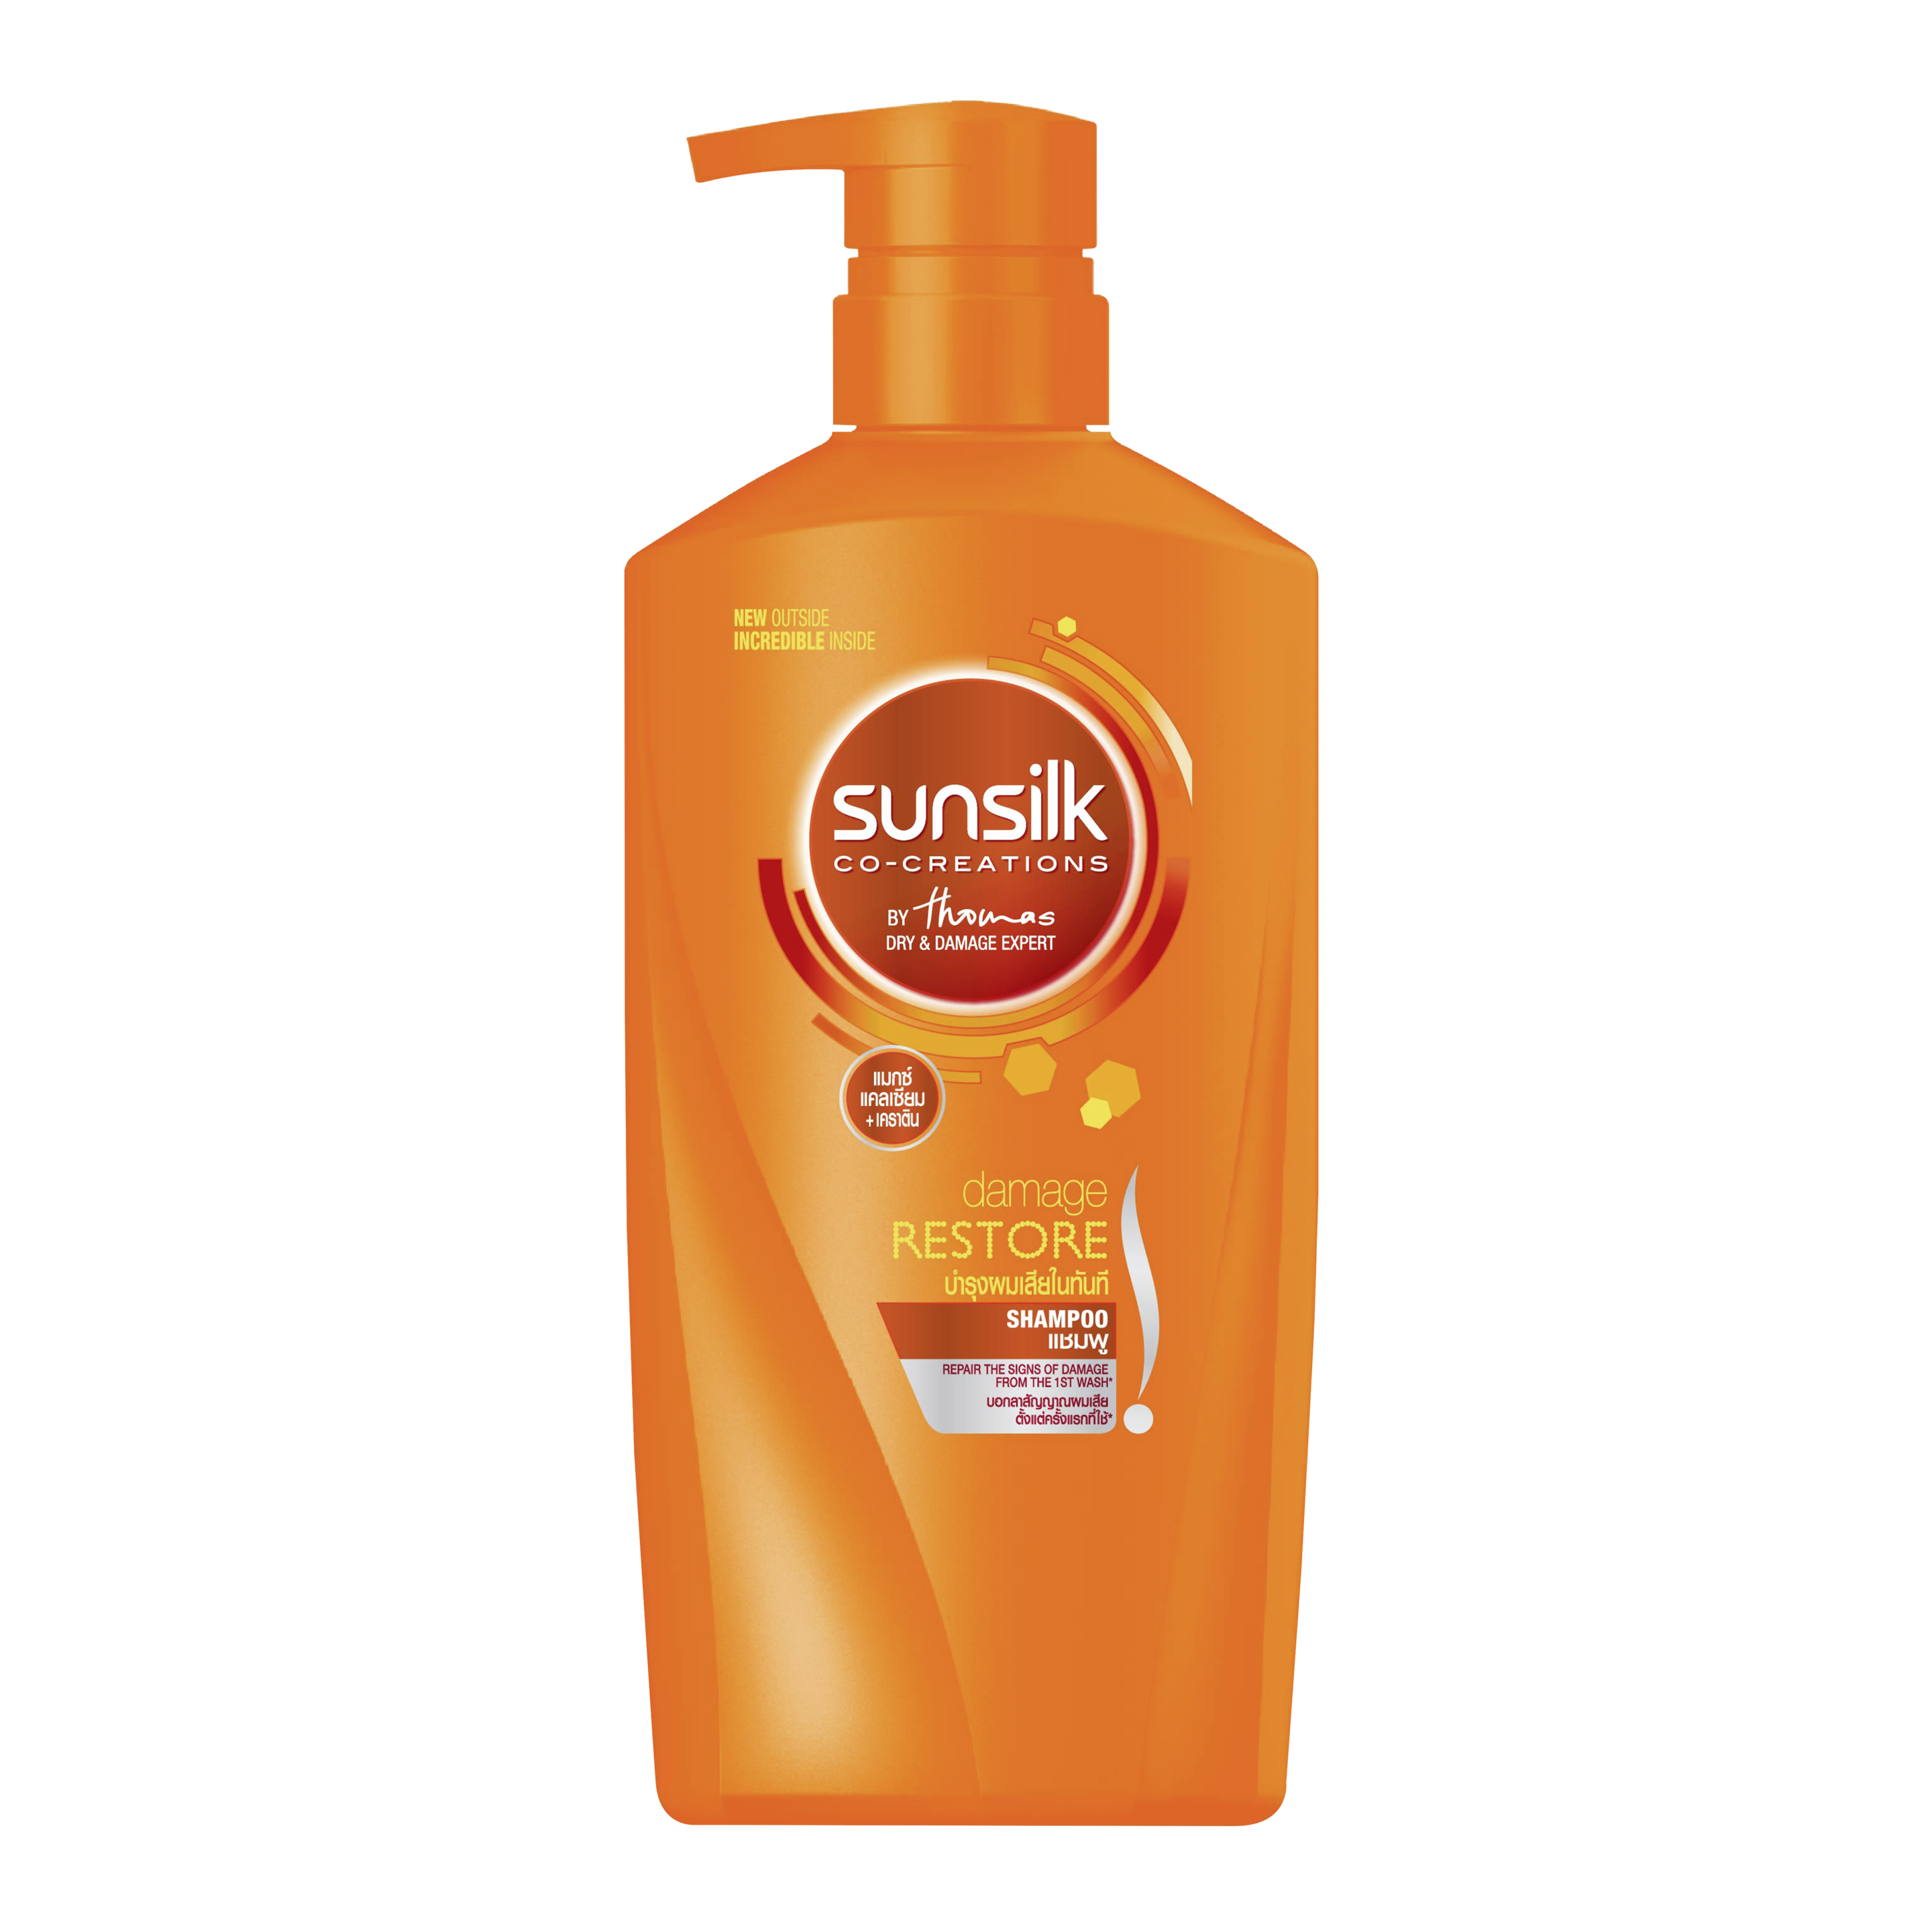 Sunsilk Damage Restore Shampoo  650ml front of pack image